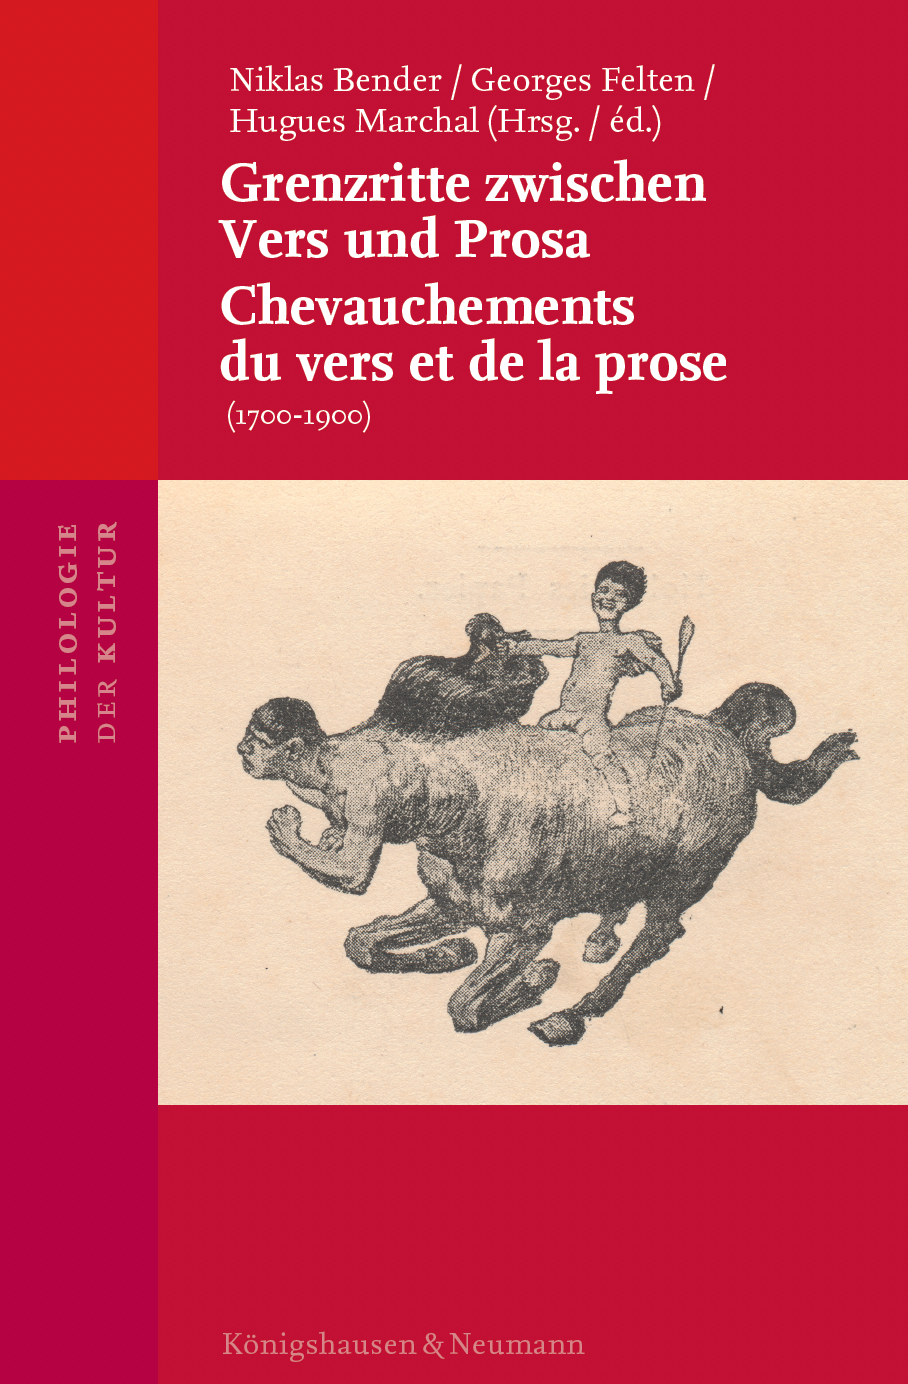 Niklas Bender, Georges Felten, Hugues Marchal (Hrsg./éd.), Grenzritte zwischen Vers und Prosa / Chevauchements du vers et de la prose (1700-1900)